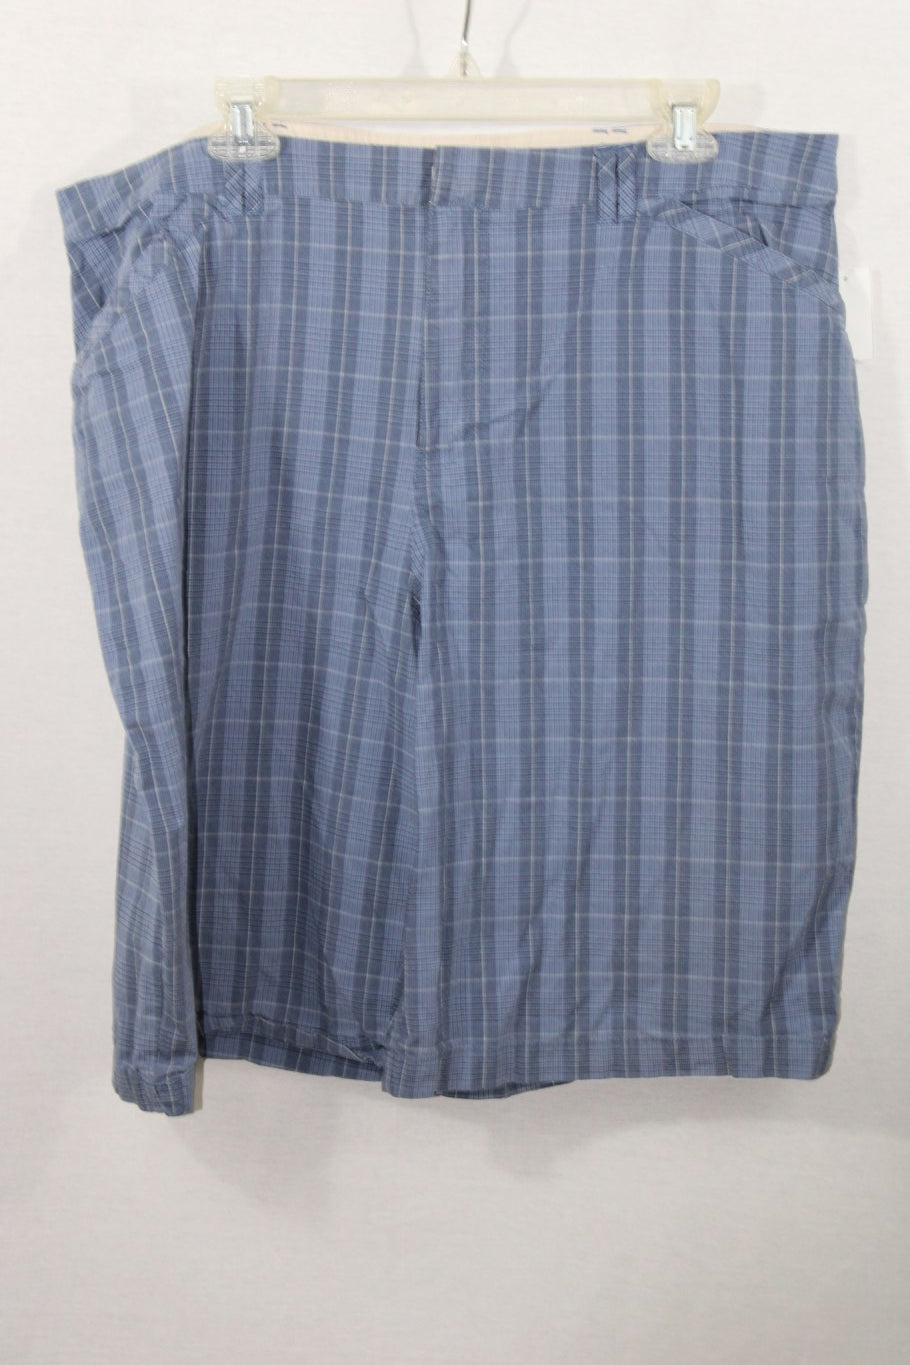 Croft & Barrow Blue Plaid Shorts | Size 20